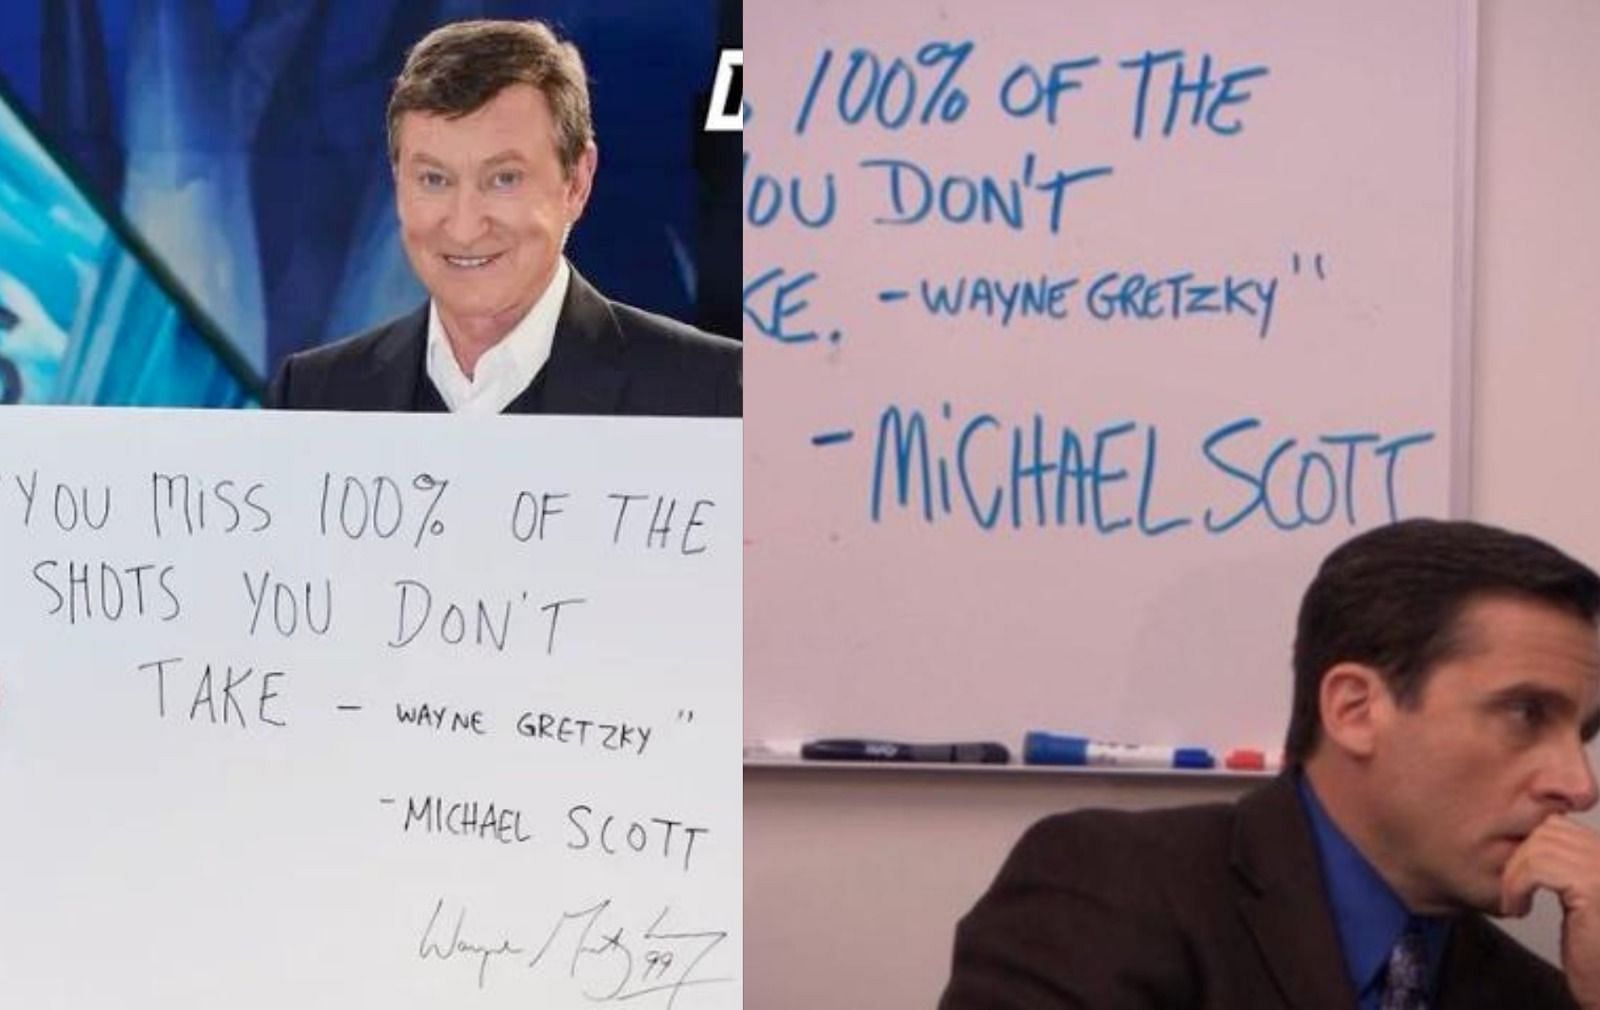 When Wayne Gretzky paid homage to Michael Scott